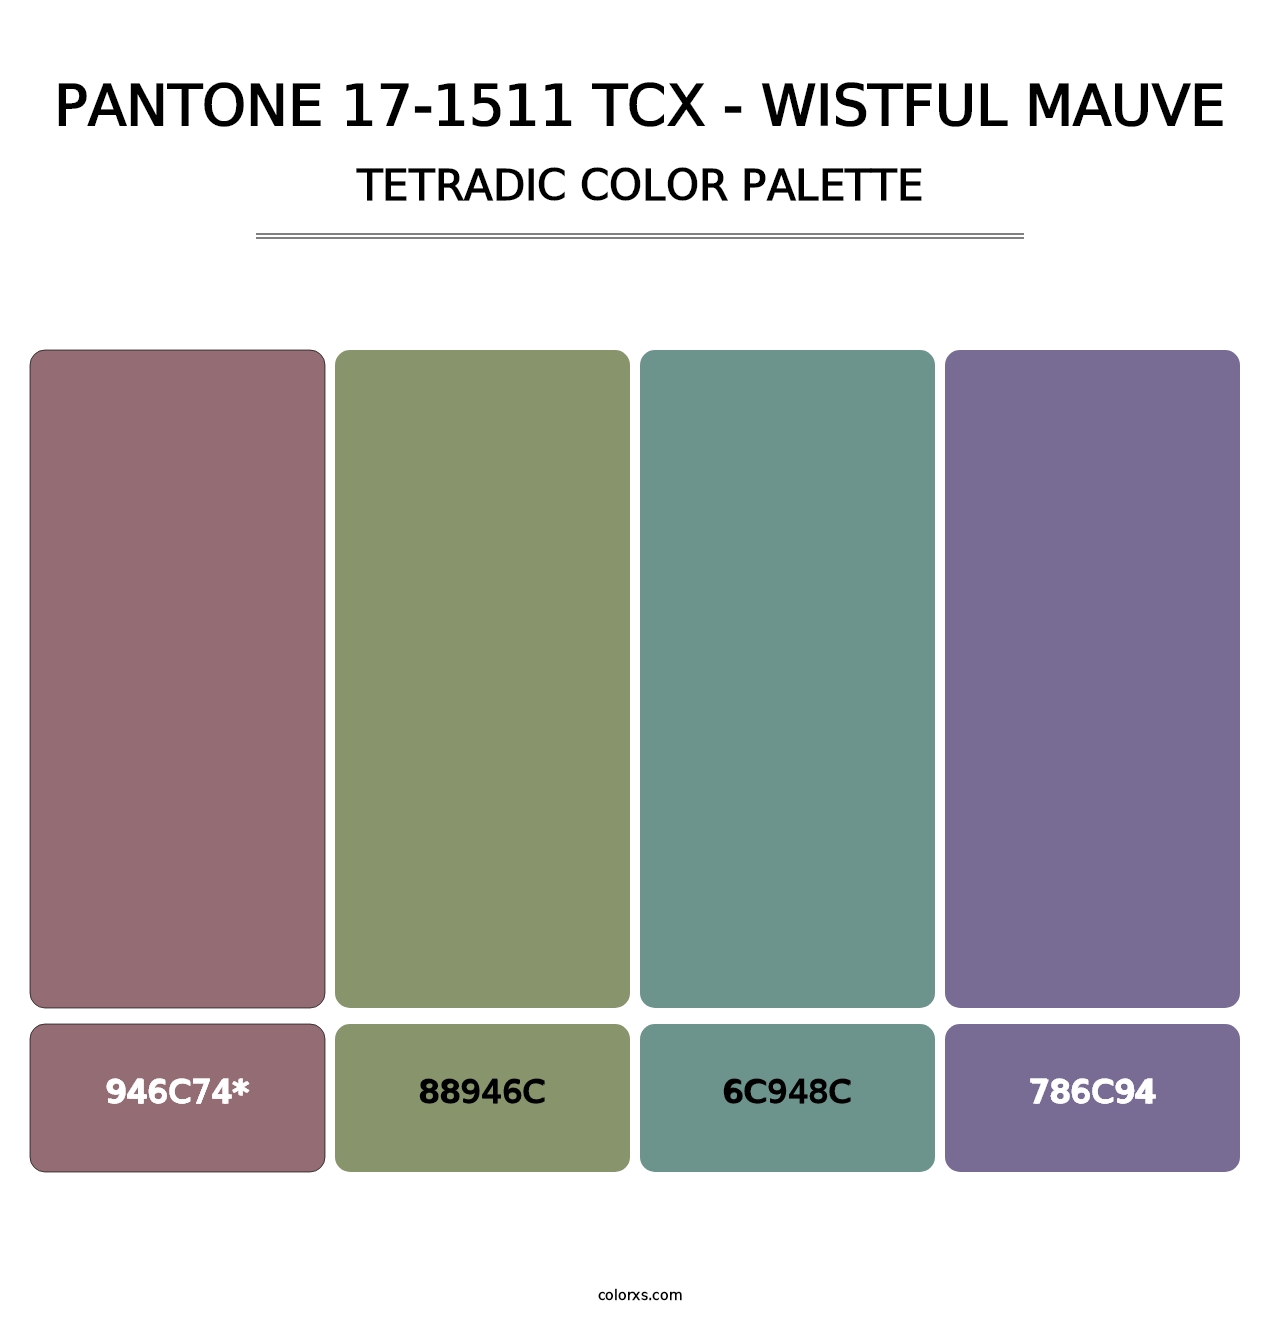 PANTONE 17-1511 TCX - Wistful Mauve - Tetradic Color Palette